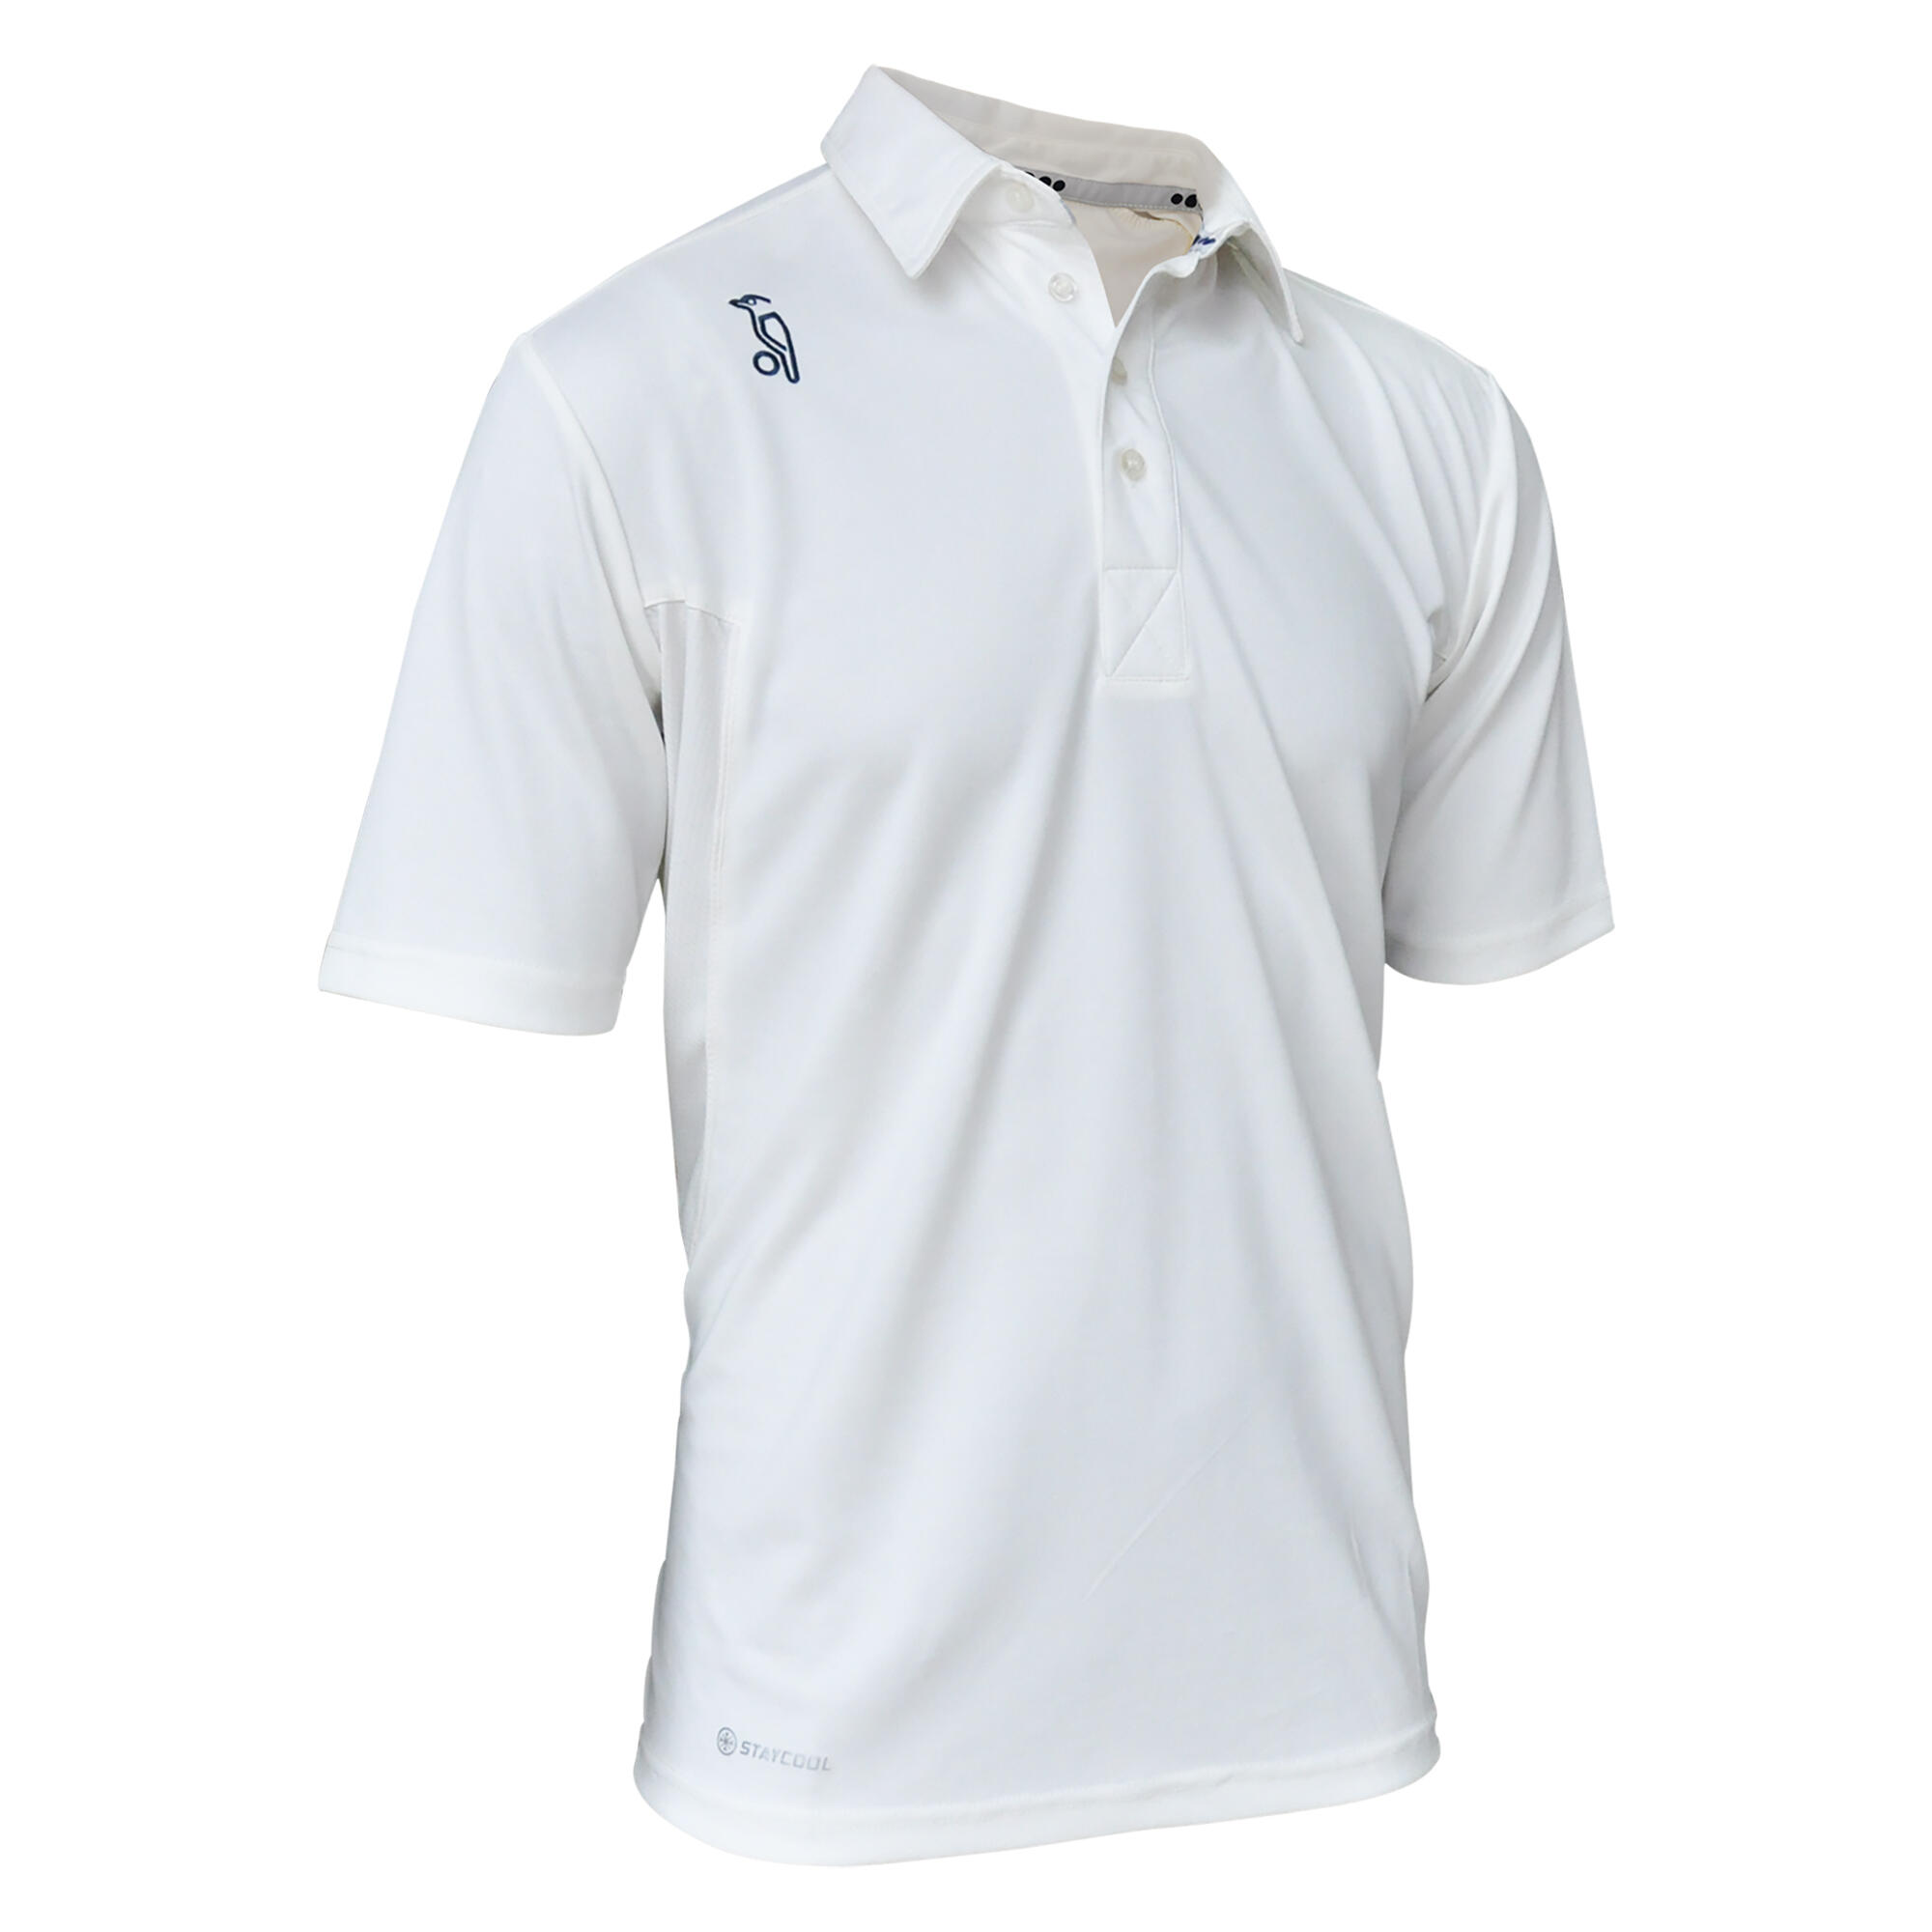 Kookaburra Pro Player Adult Cricket Shirt White 1/2